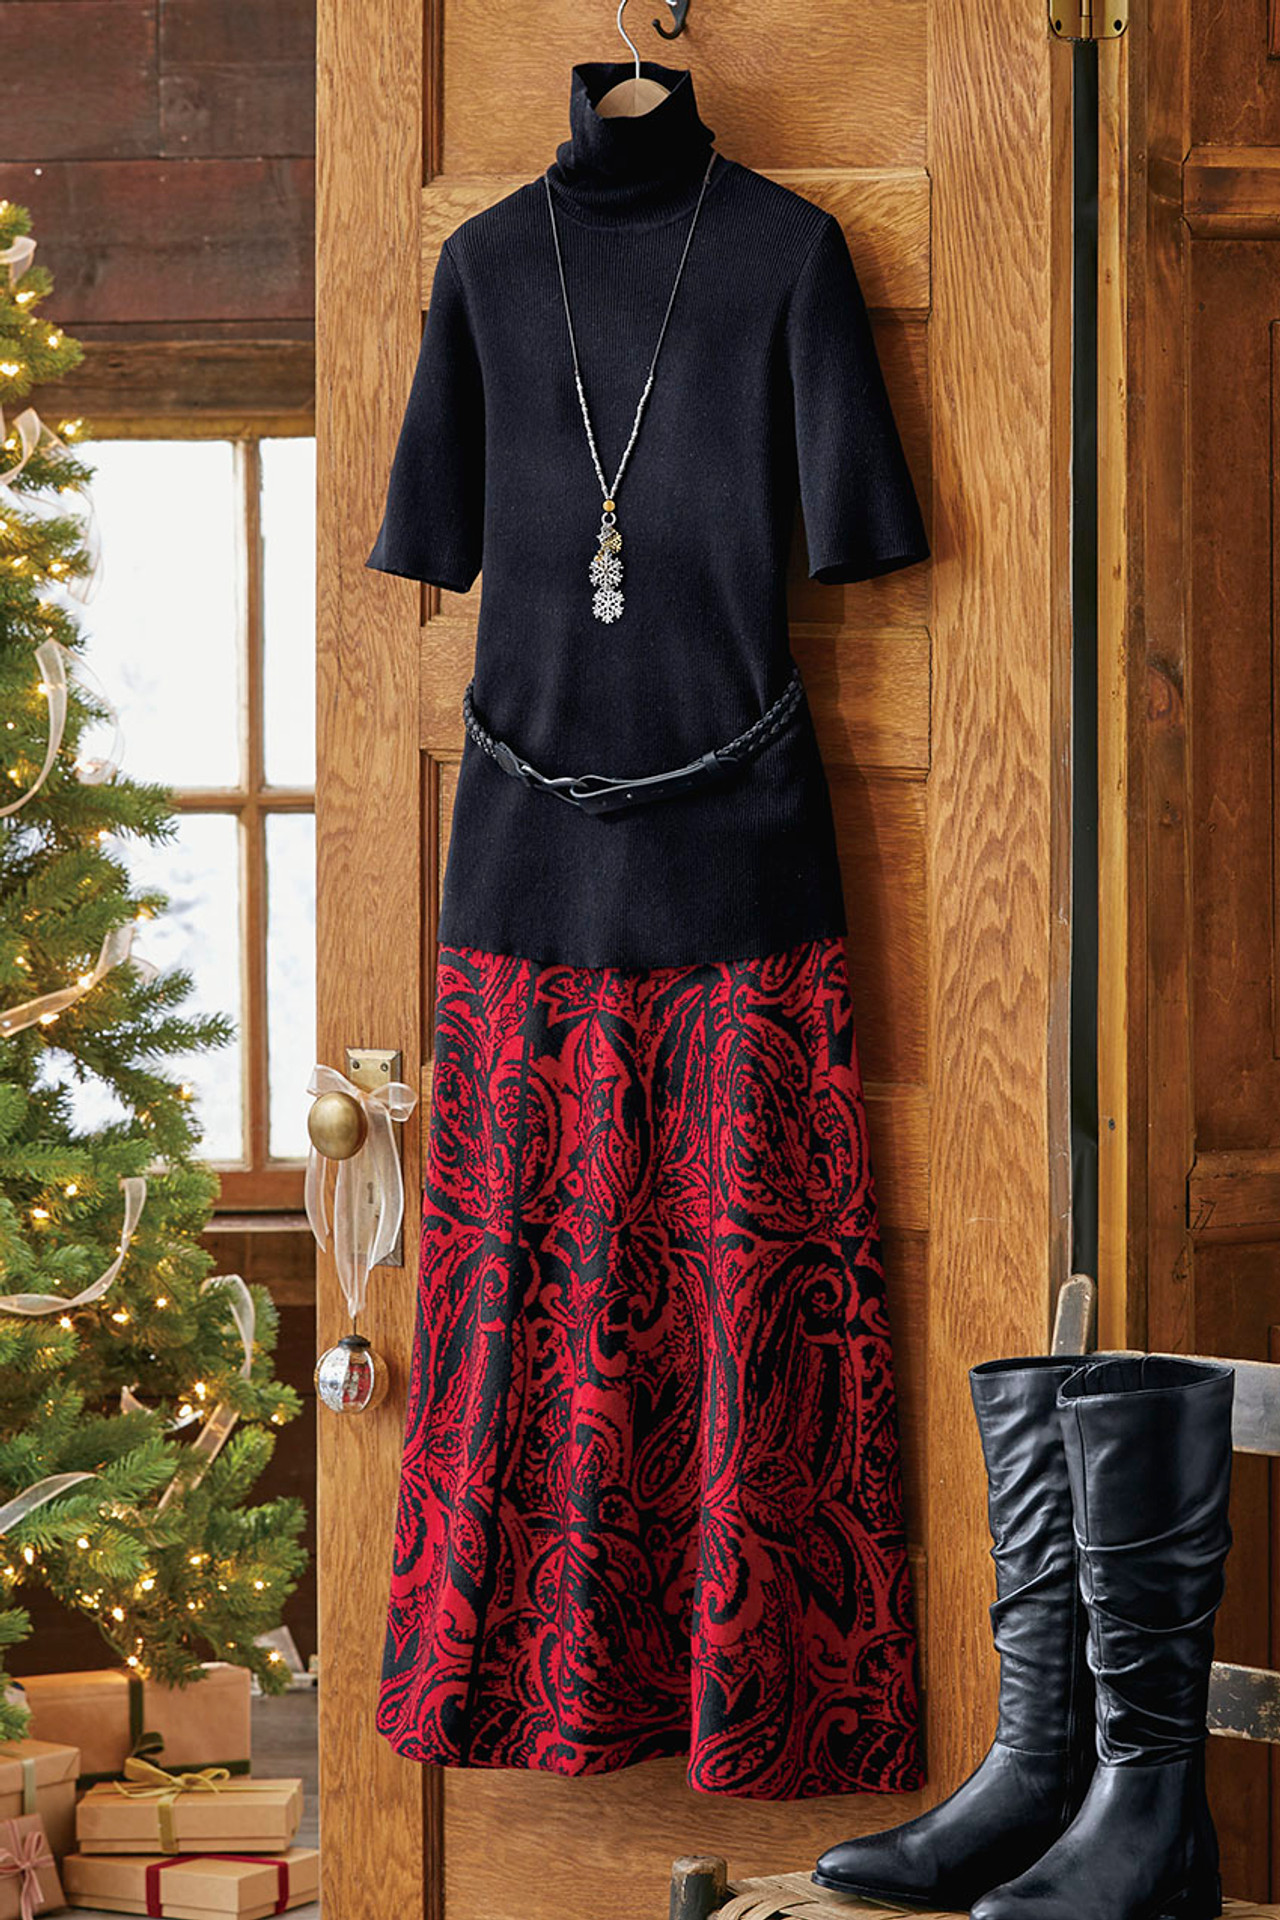 Buy SNEH Women's Brocade Silk Maxi Skirt (SNBSKMRN456, Maroon, Free Size)  at Amazon.in